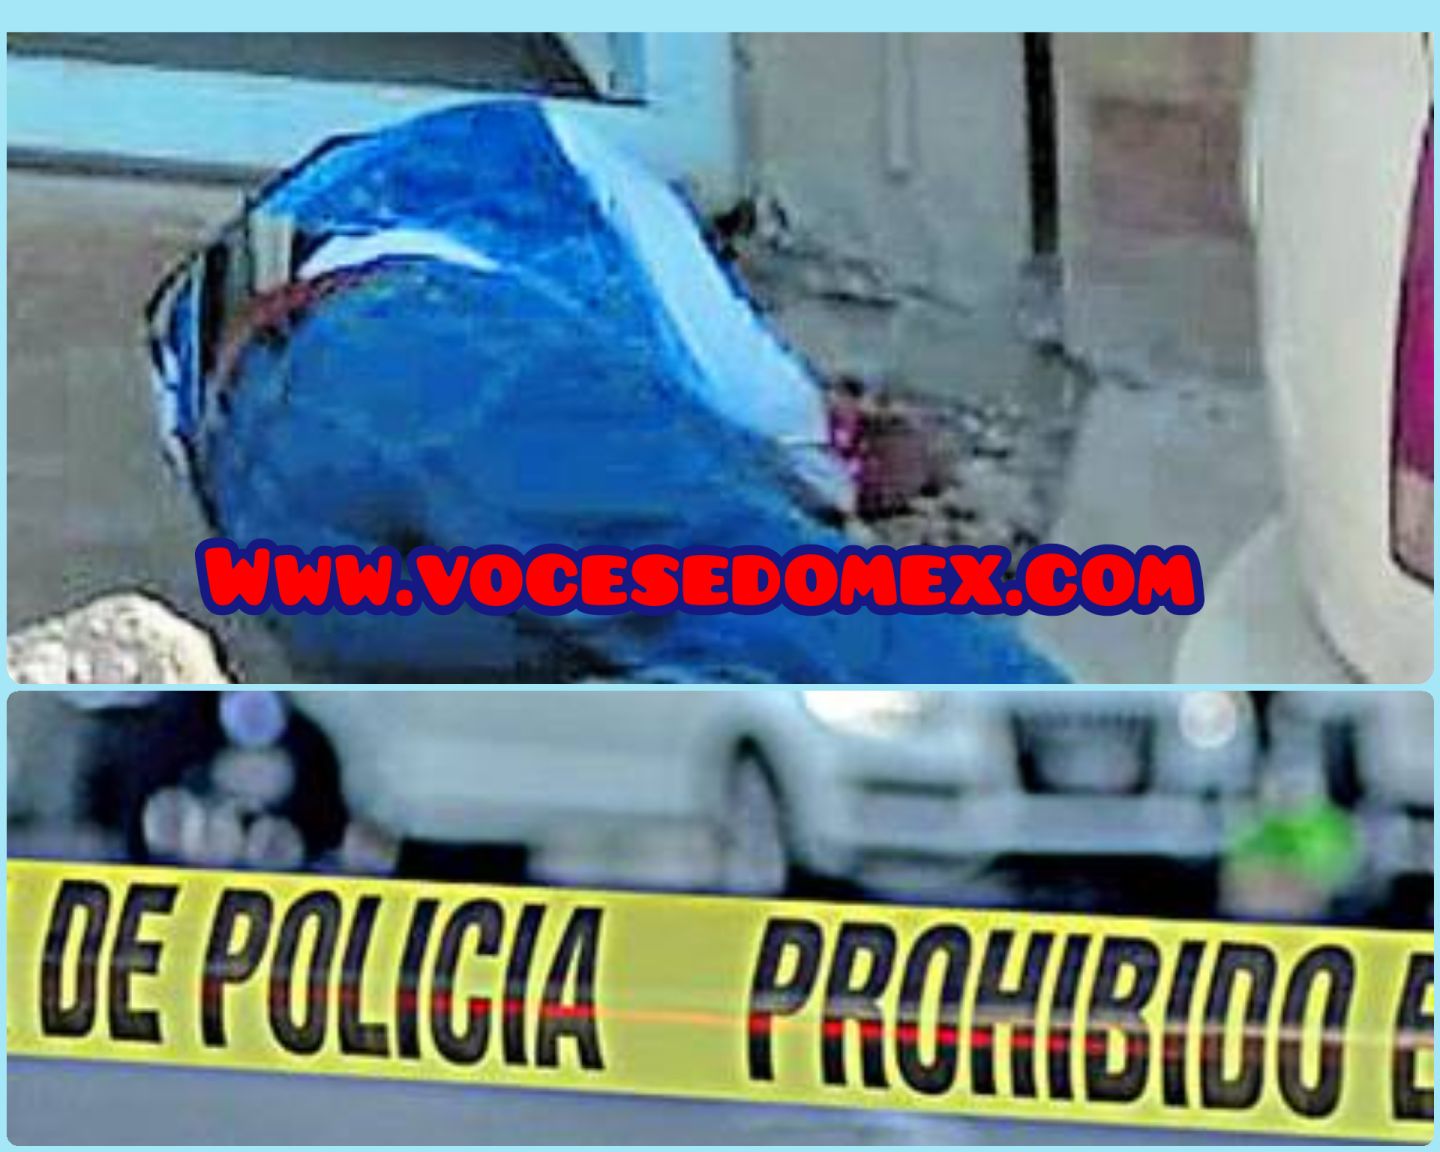 Ejecutan a hombre con 13 balazos enfrente de su casa en Chimalhuacán 